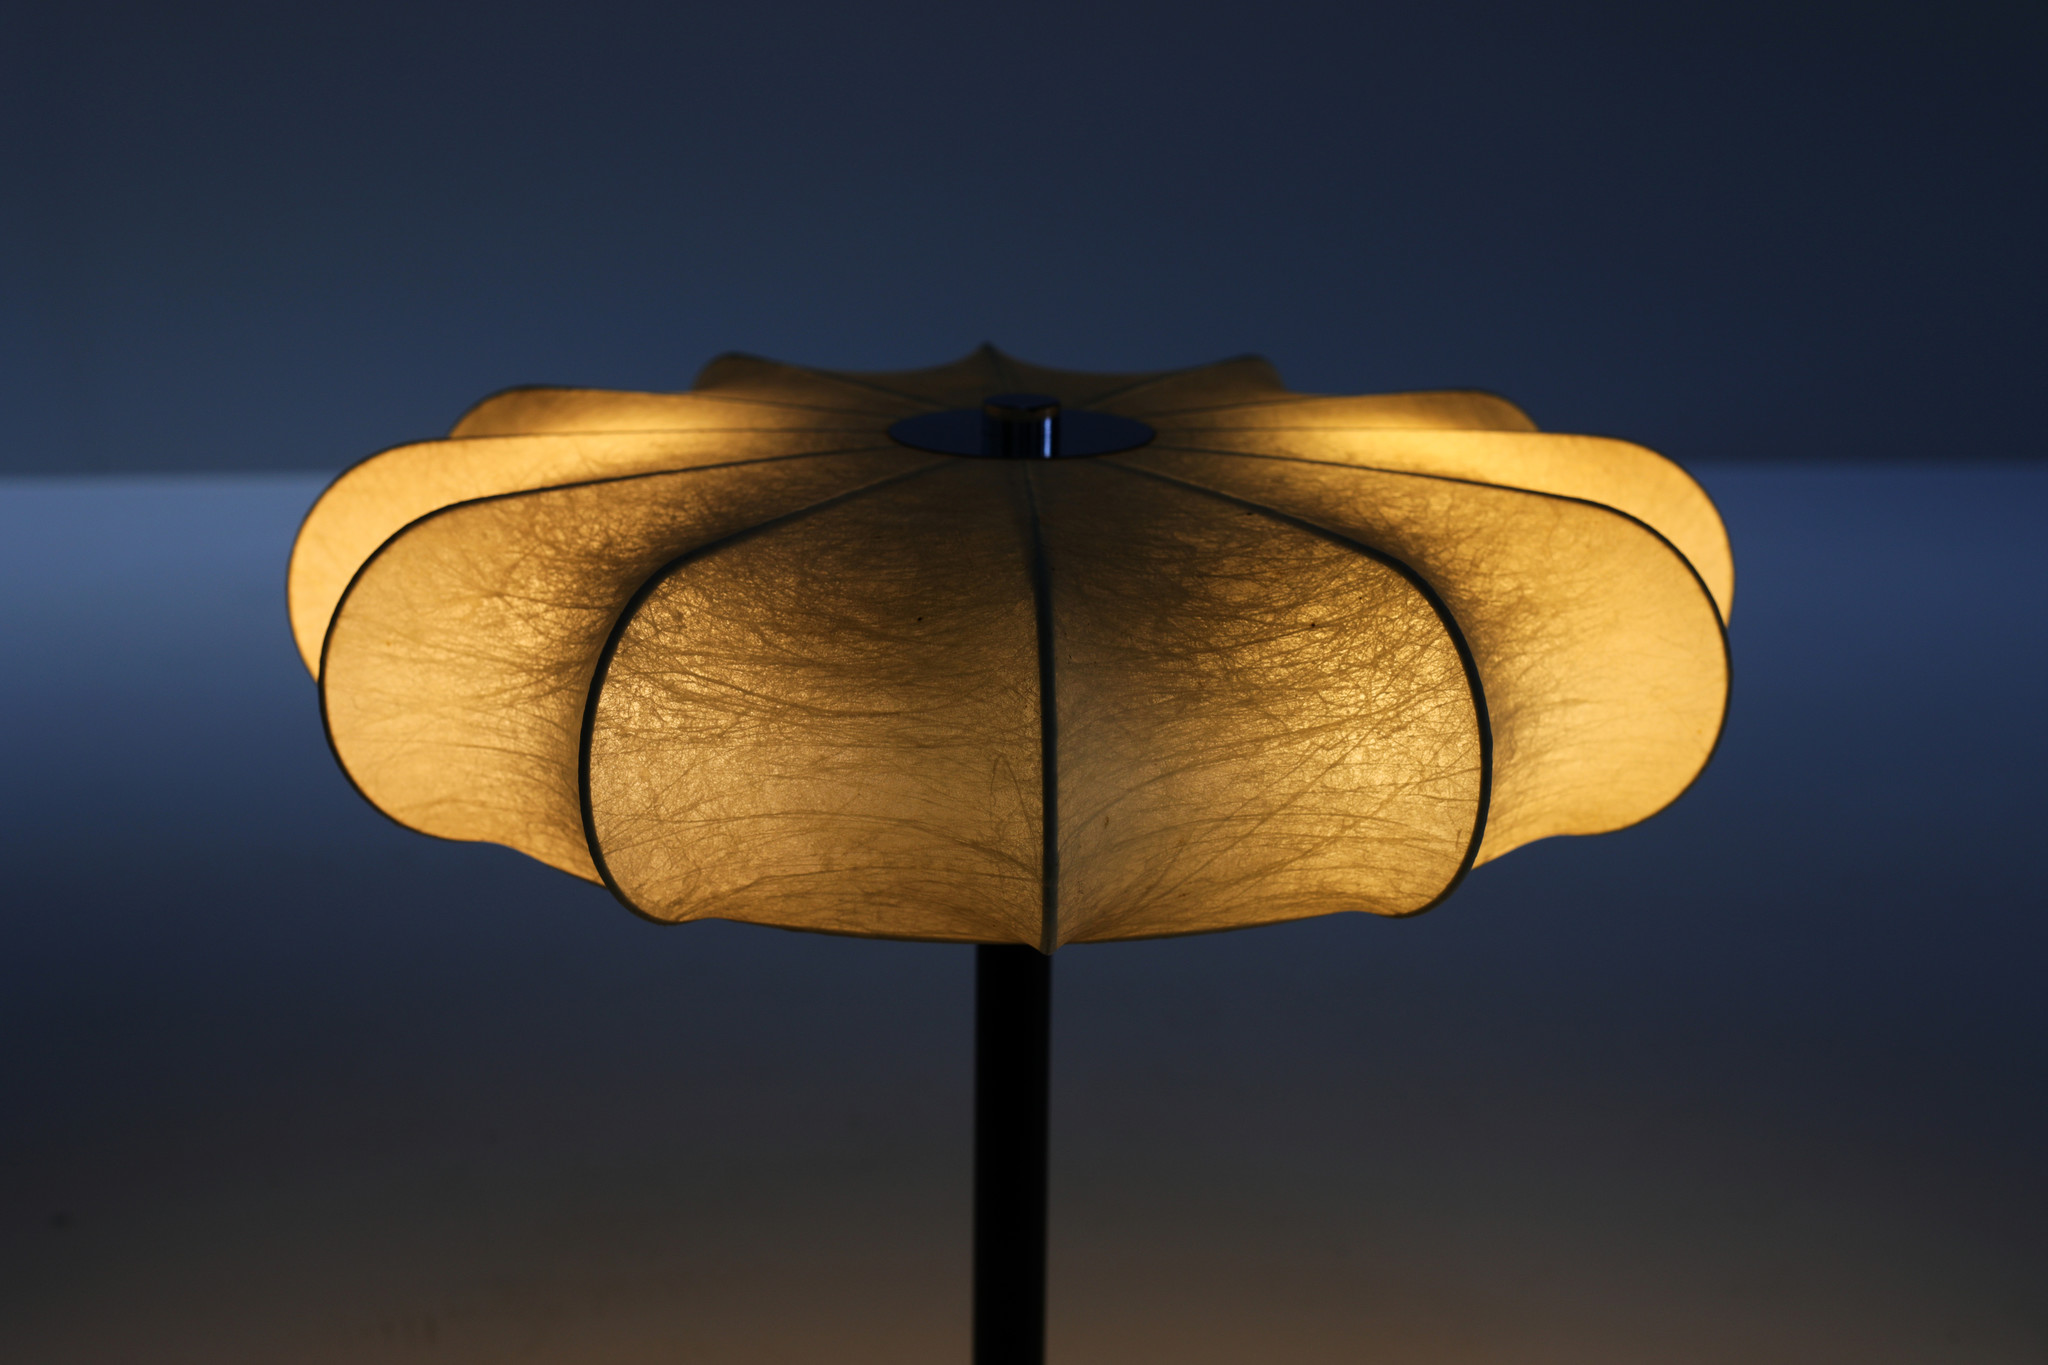 Vintage tafellamp in de stijl van Achille & Pier Giacomo